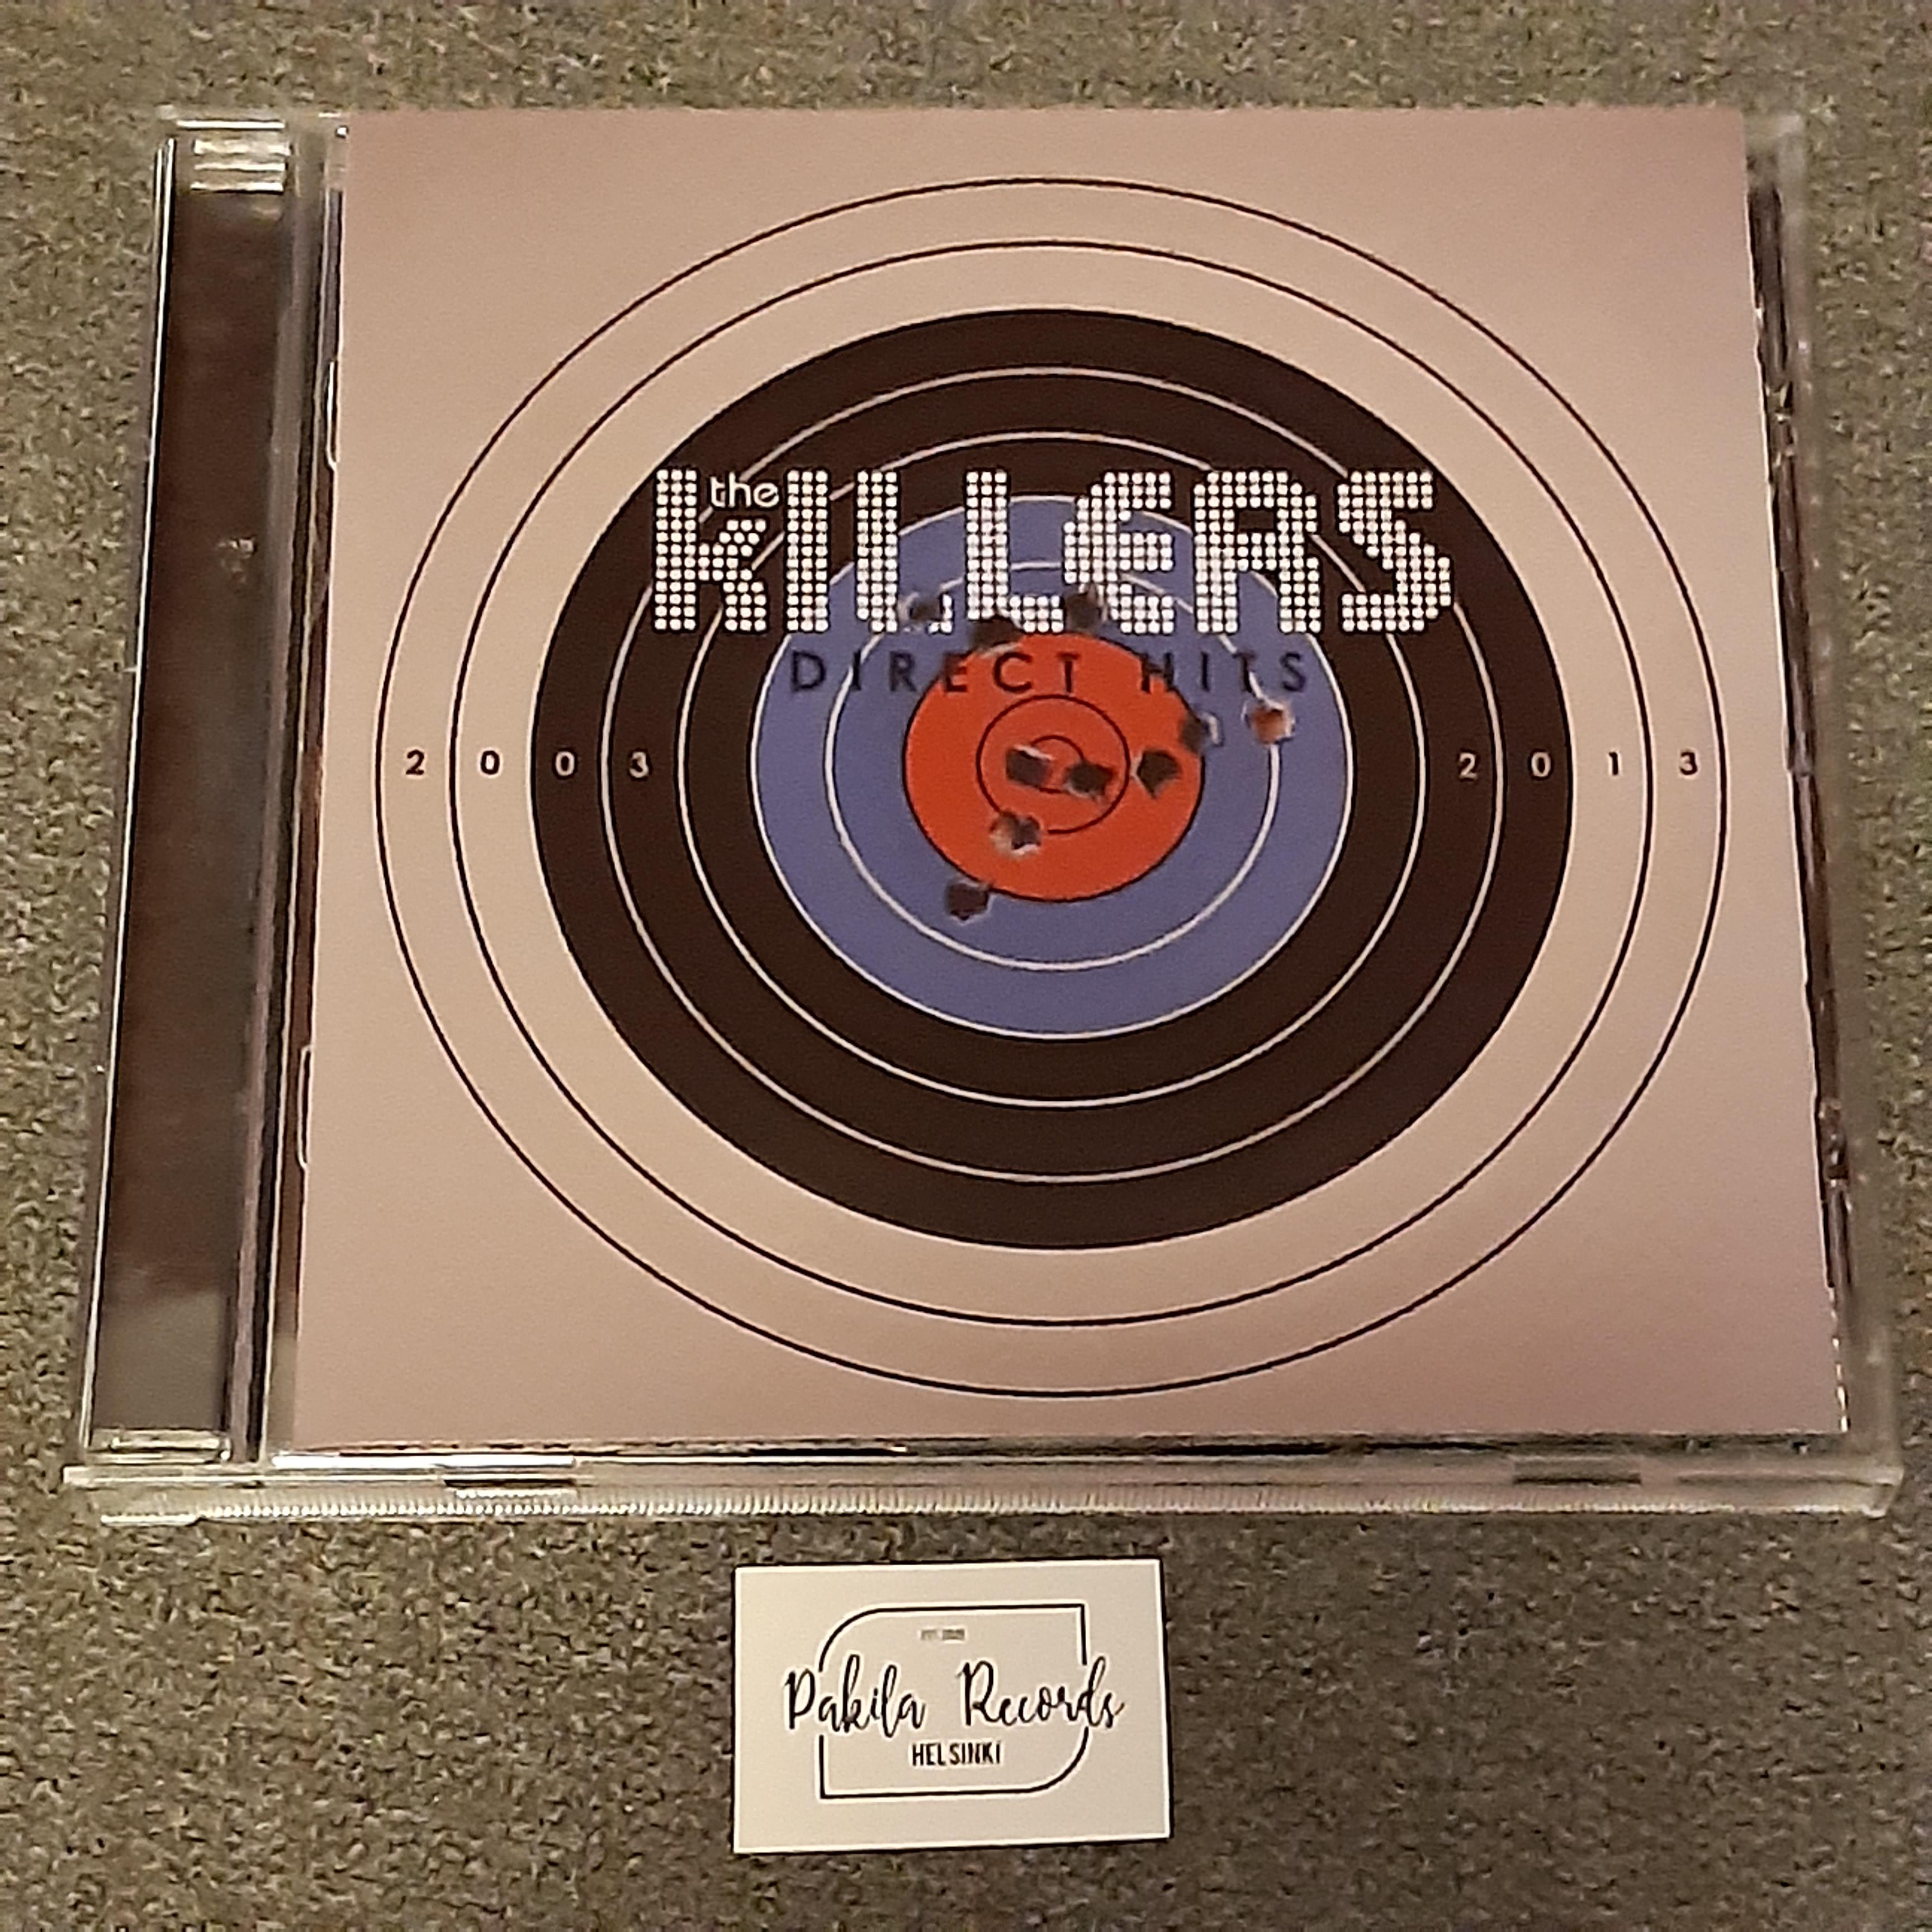 Killers - Direct Hits - CD (käytetty)